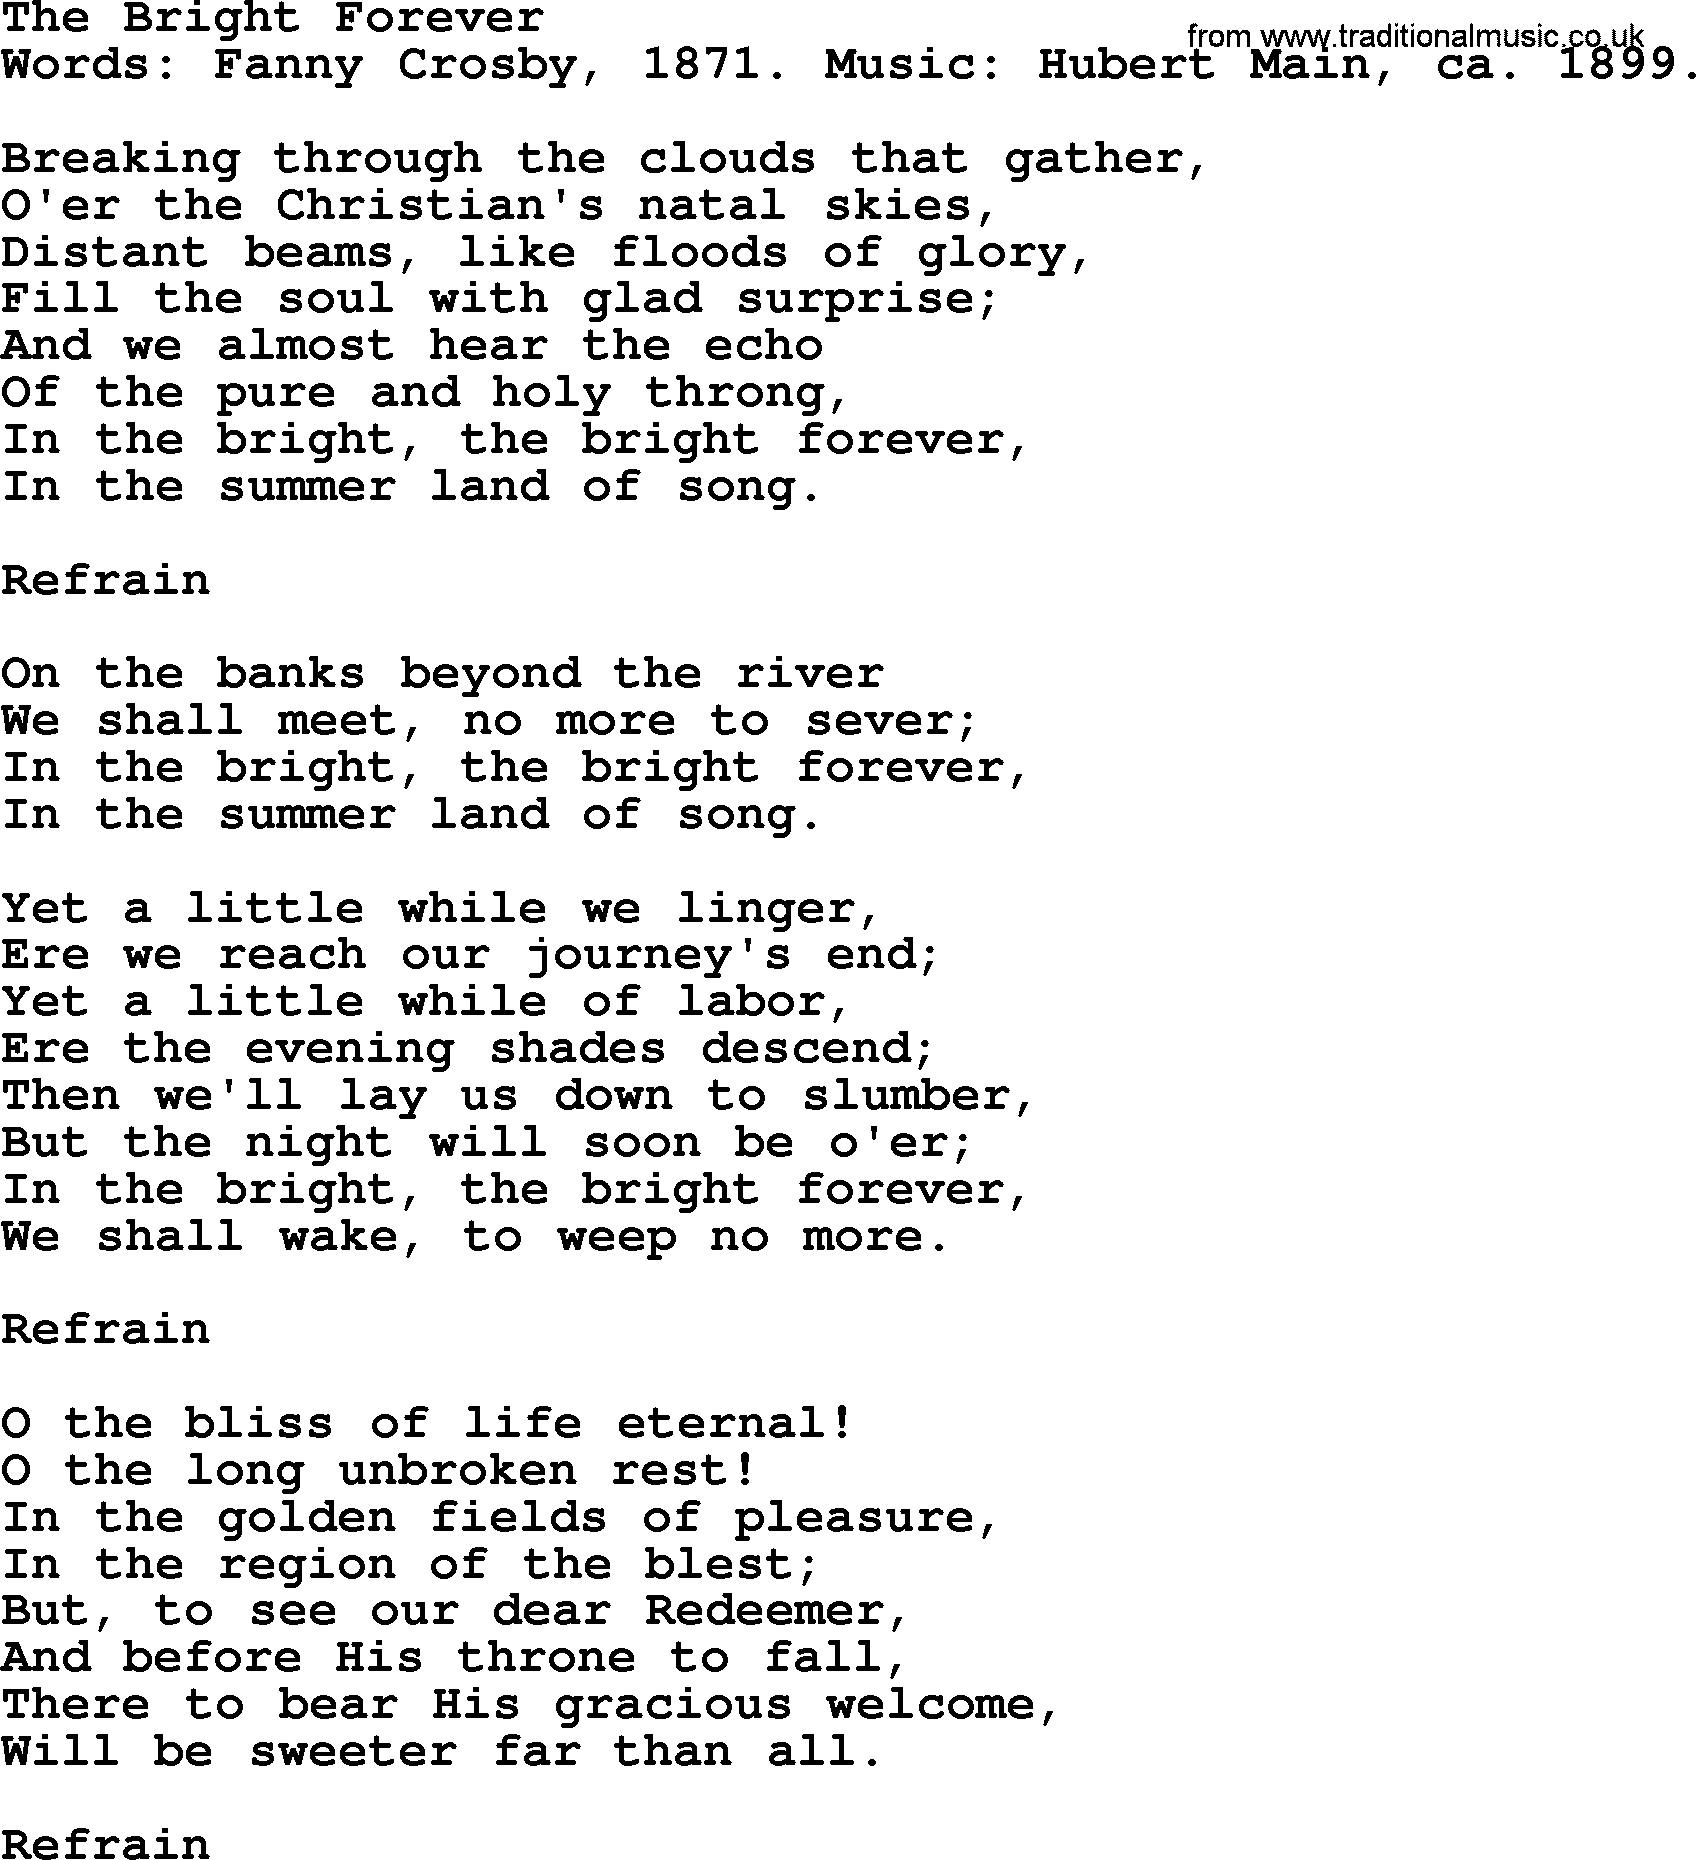 Fanny Crosby song: The Bright Forever, lyrics